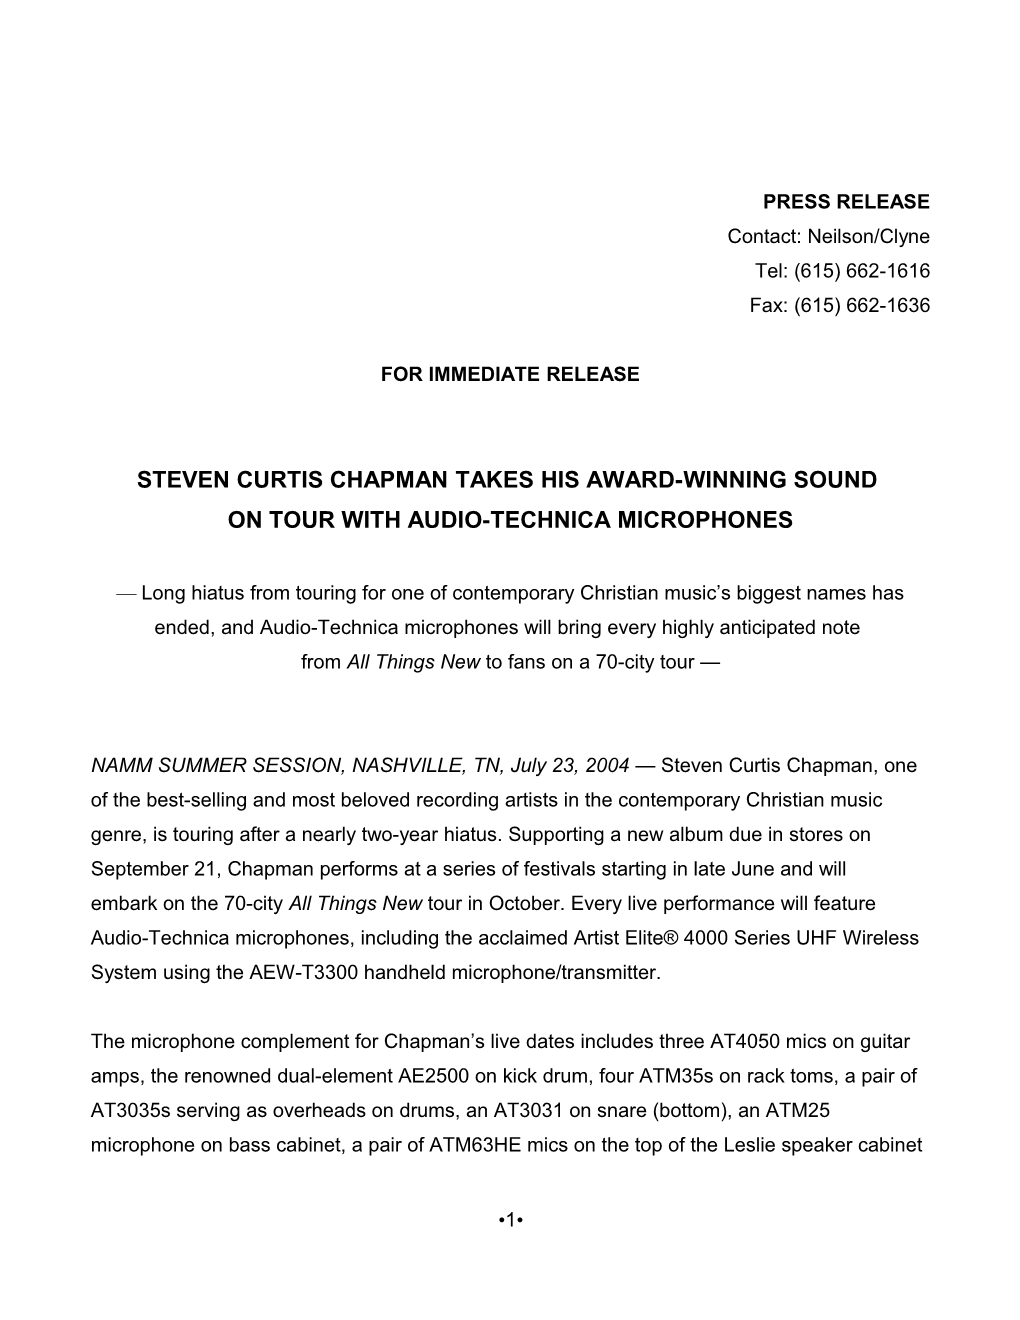 Steven Curtis Chapman Takes His Award-Winning Sound